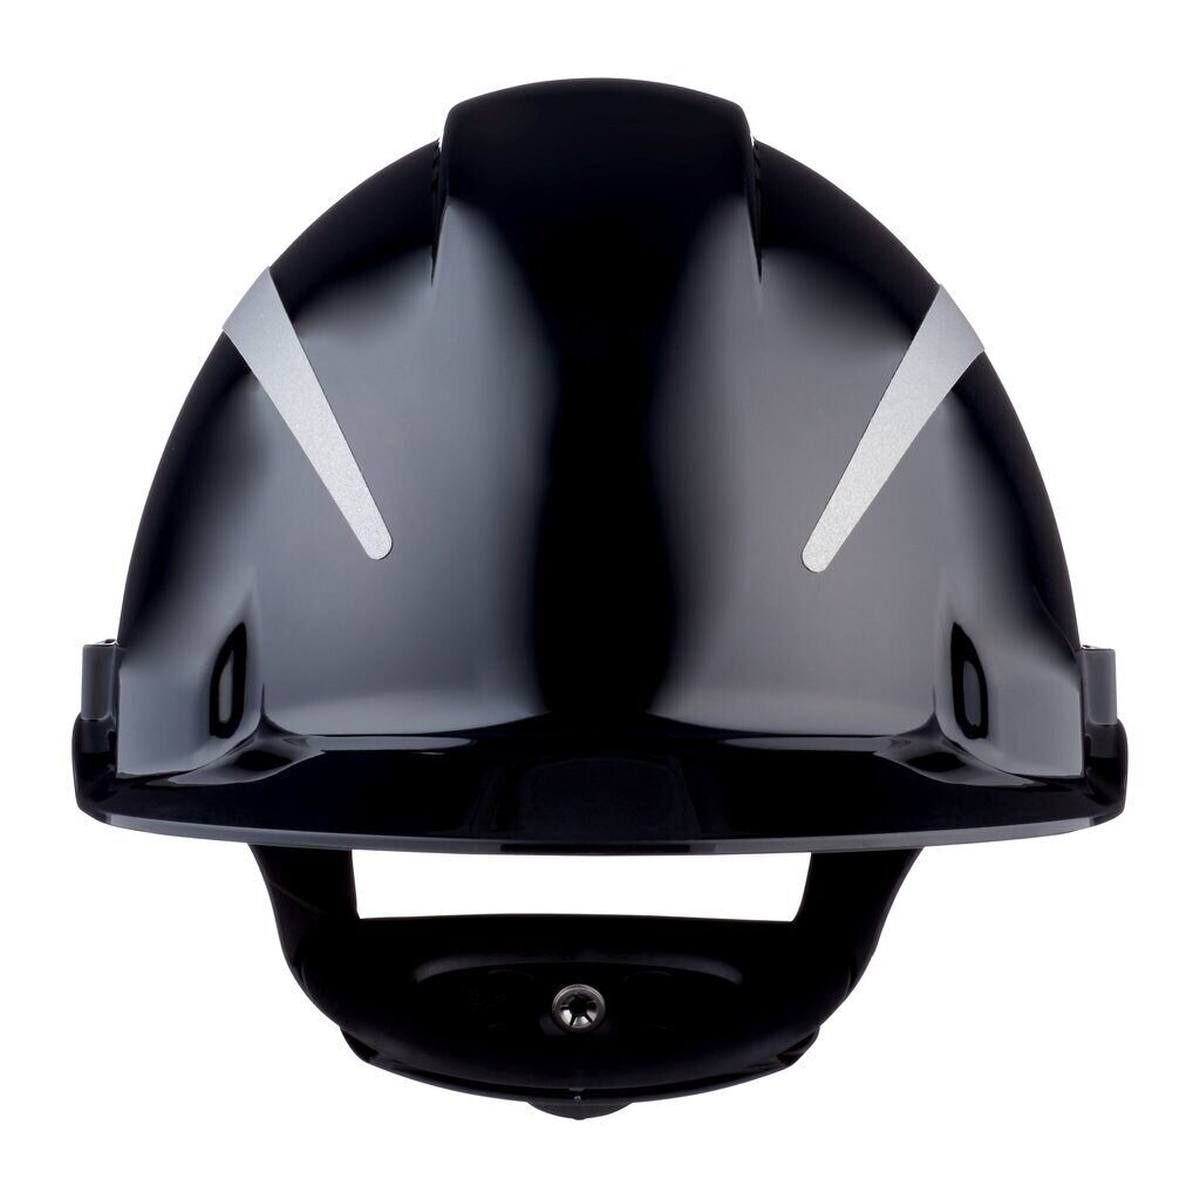 3M G3000 safety helmet with UV indicator, black, ABS, ventilated ratchet fastener, plastic sweatband, reflective sticker